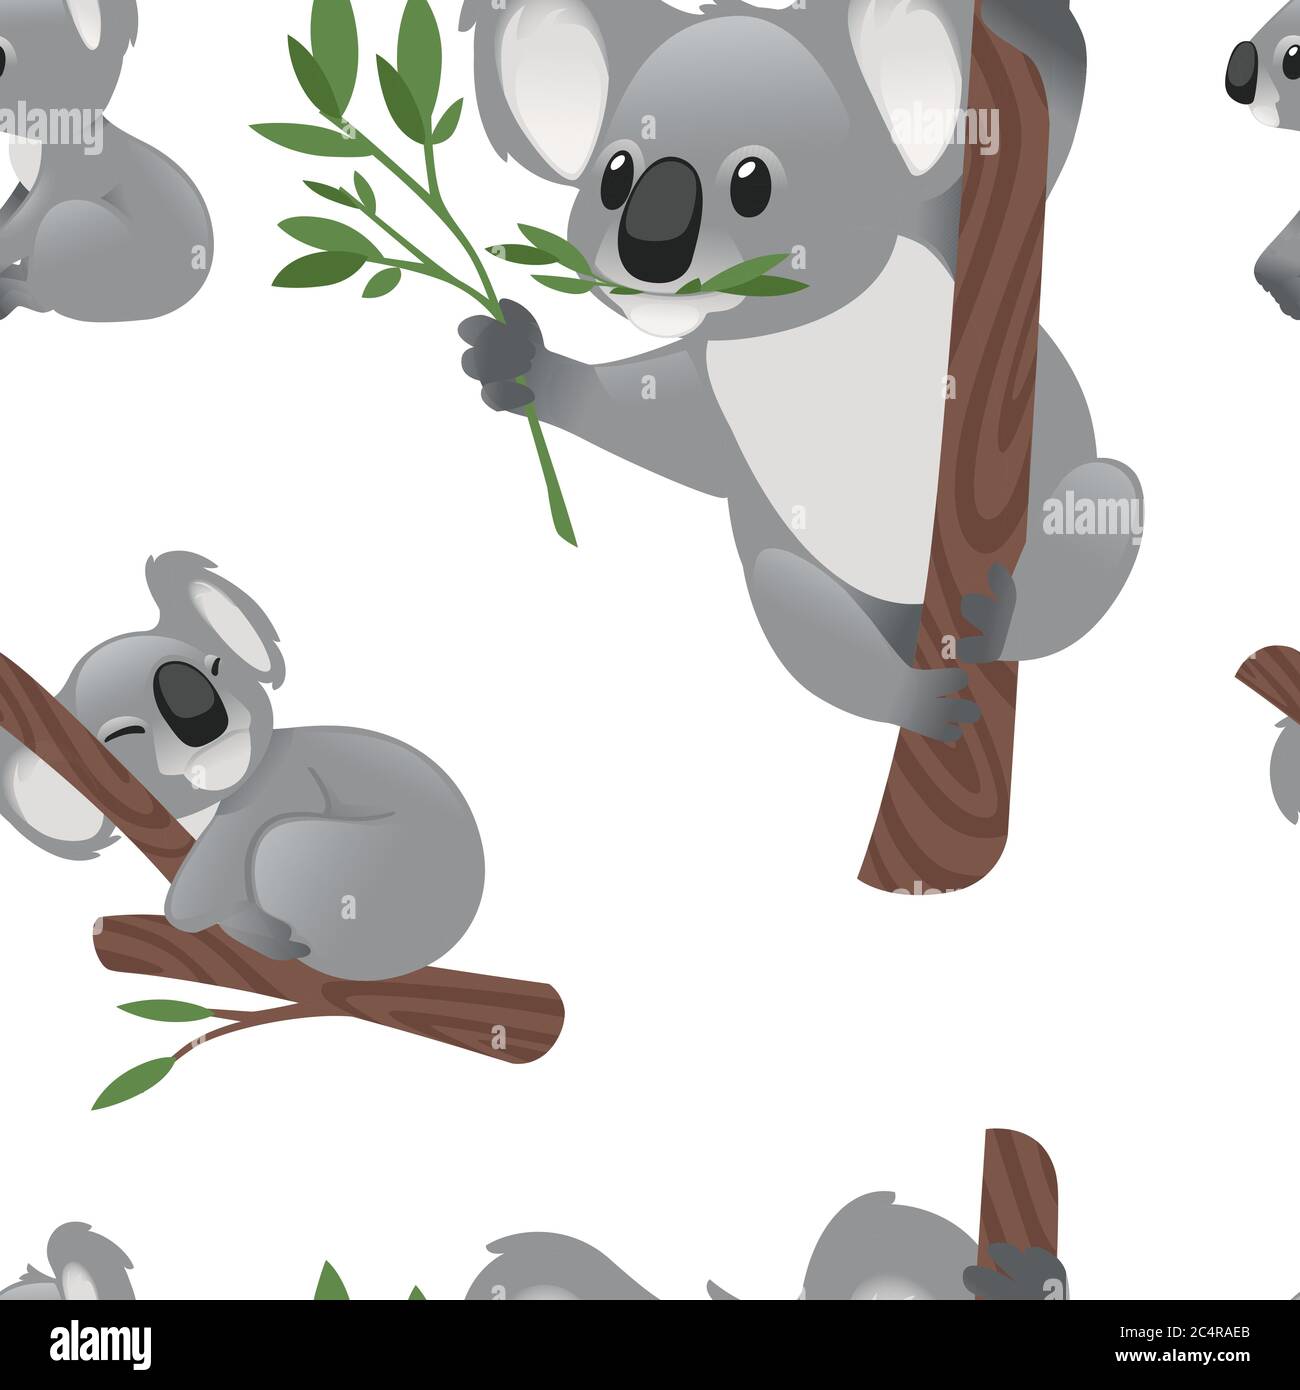 Seamless pattern of cute grey koala bear in different poses eating sleeping  leaves cartoon animal design flat vector illustration on white background  Stock Vector Image & Art - Alamy